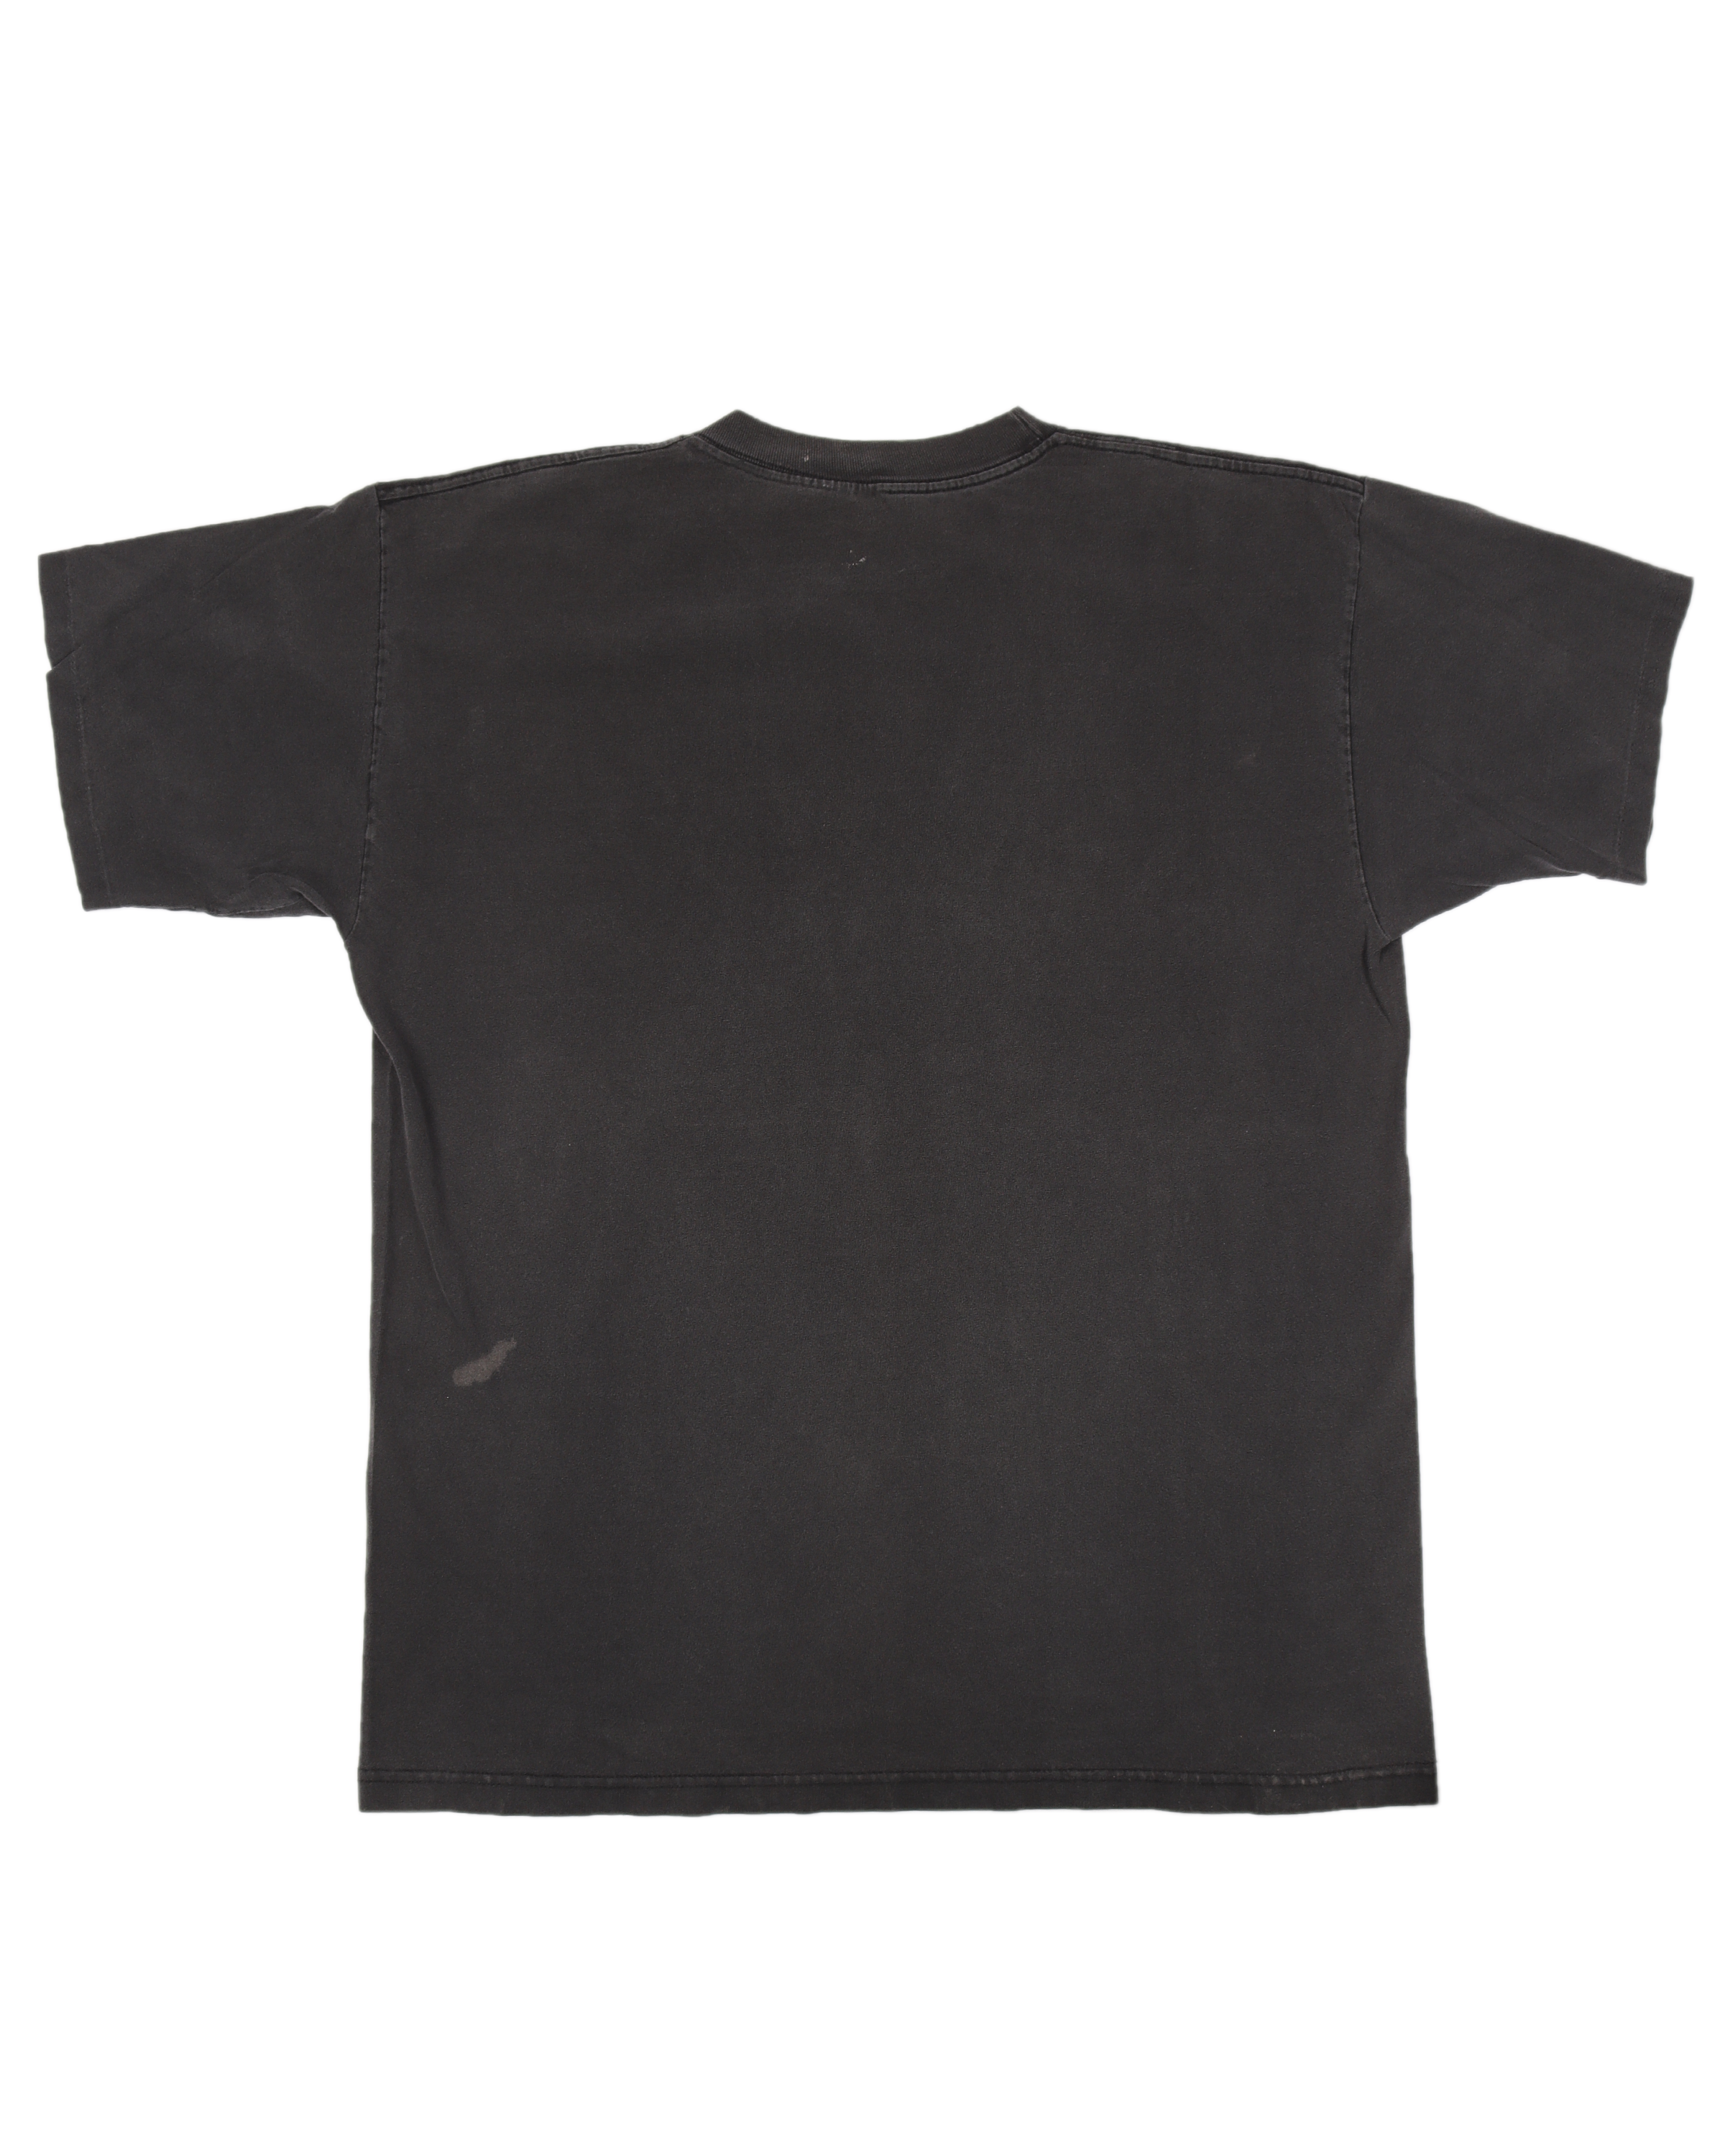 Method Man Tical 2000: Judgement Day T-Shirt